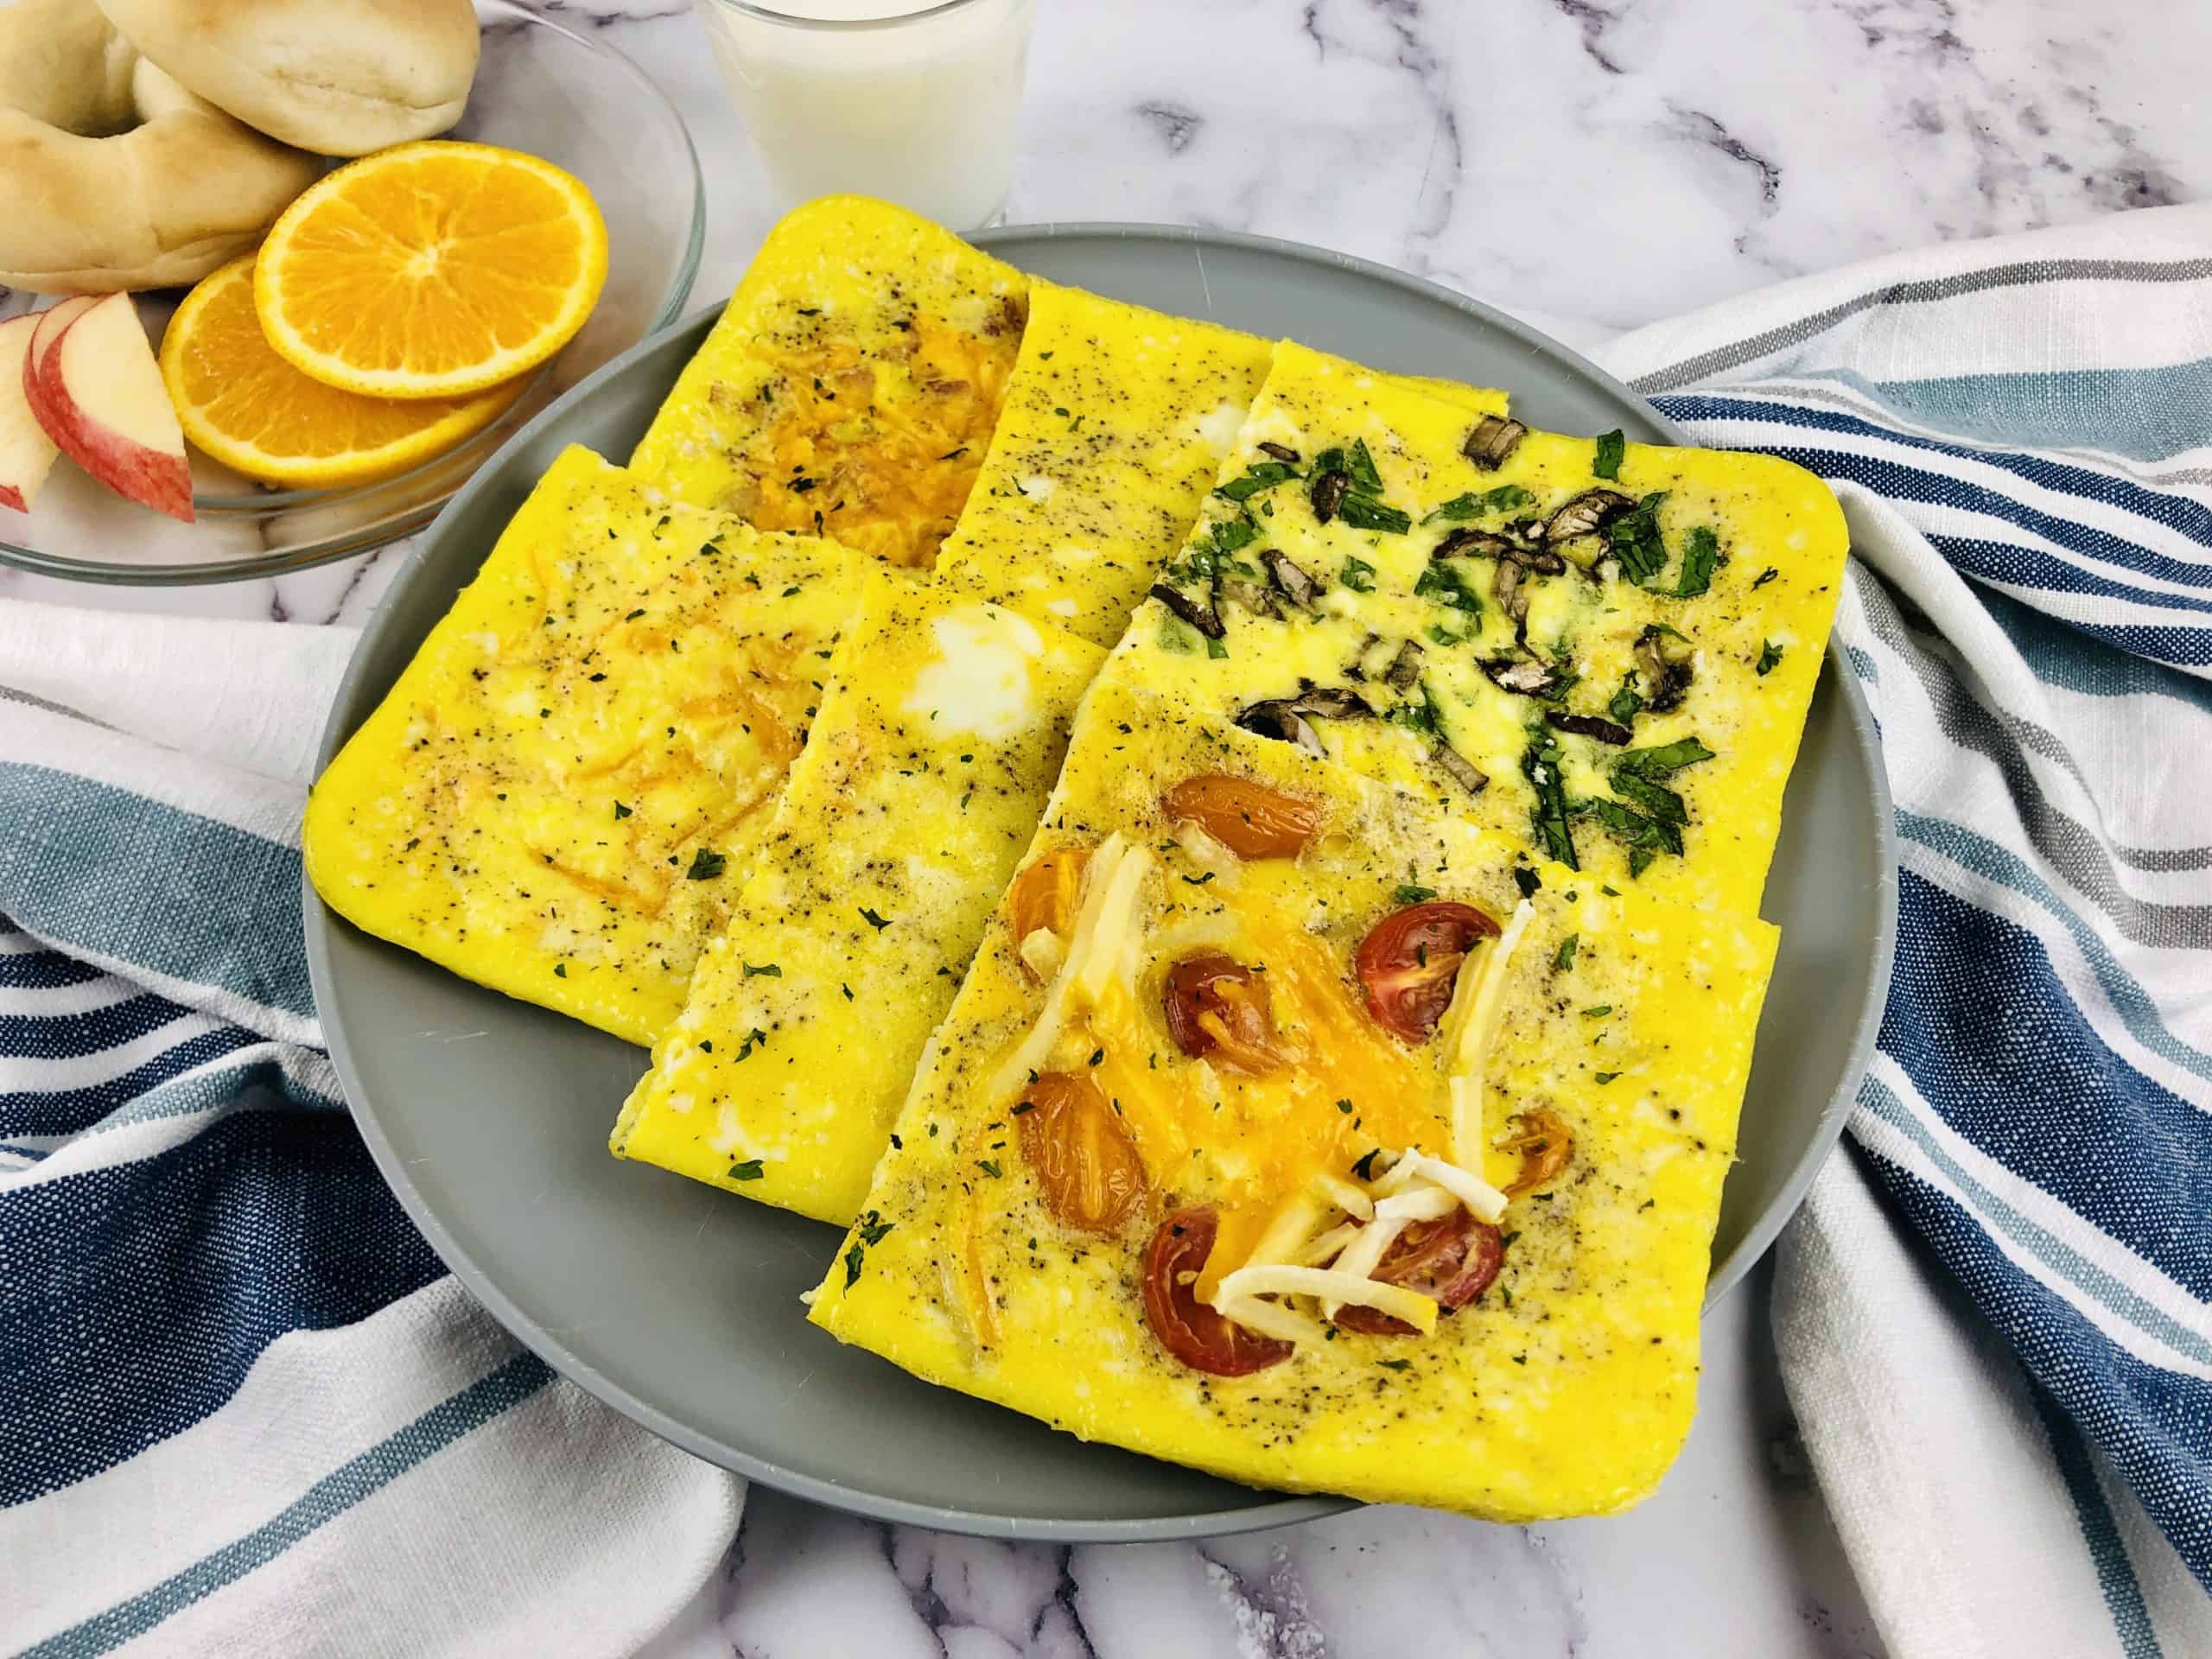 Deliciosa y nutritiva omelette al horno